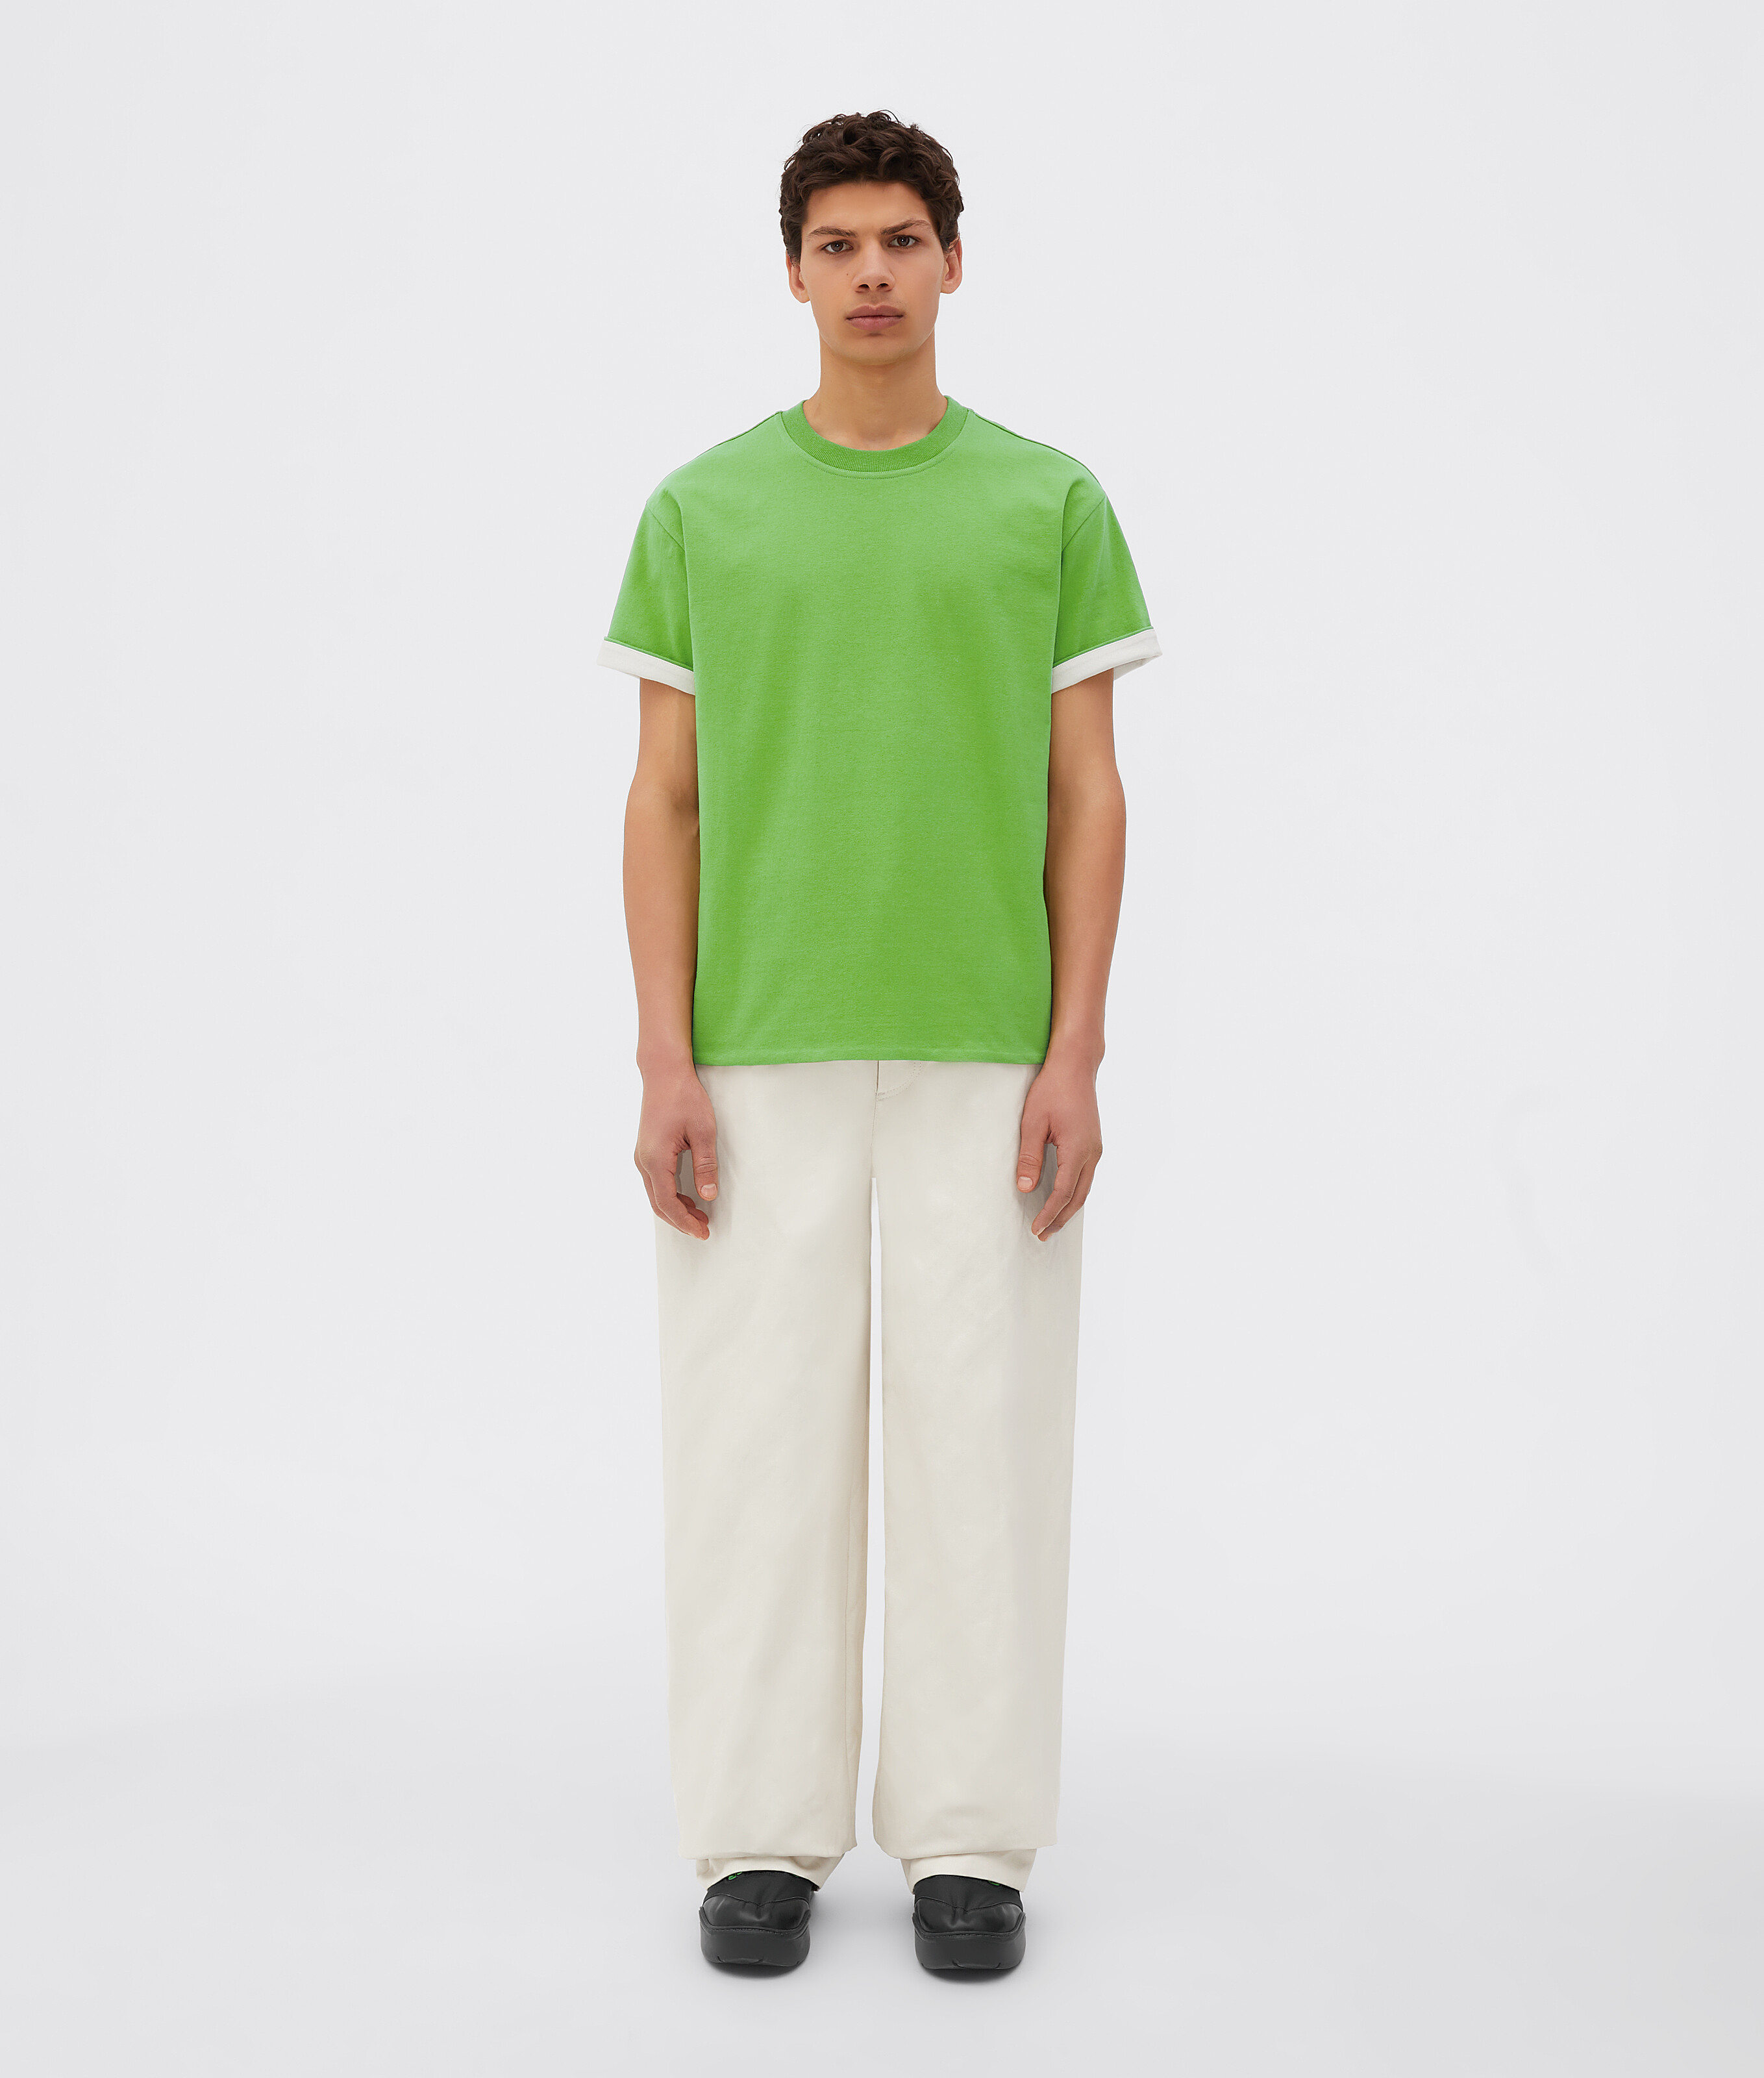 Bottega Men's T-Shirt Acid Green / White. Shop online